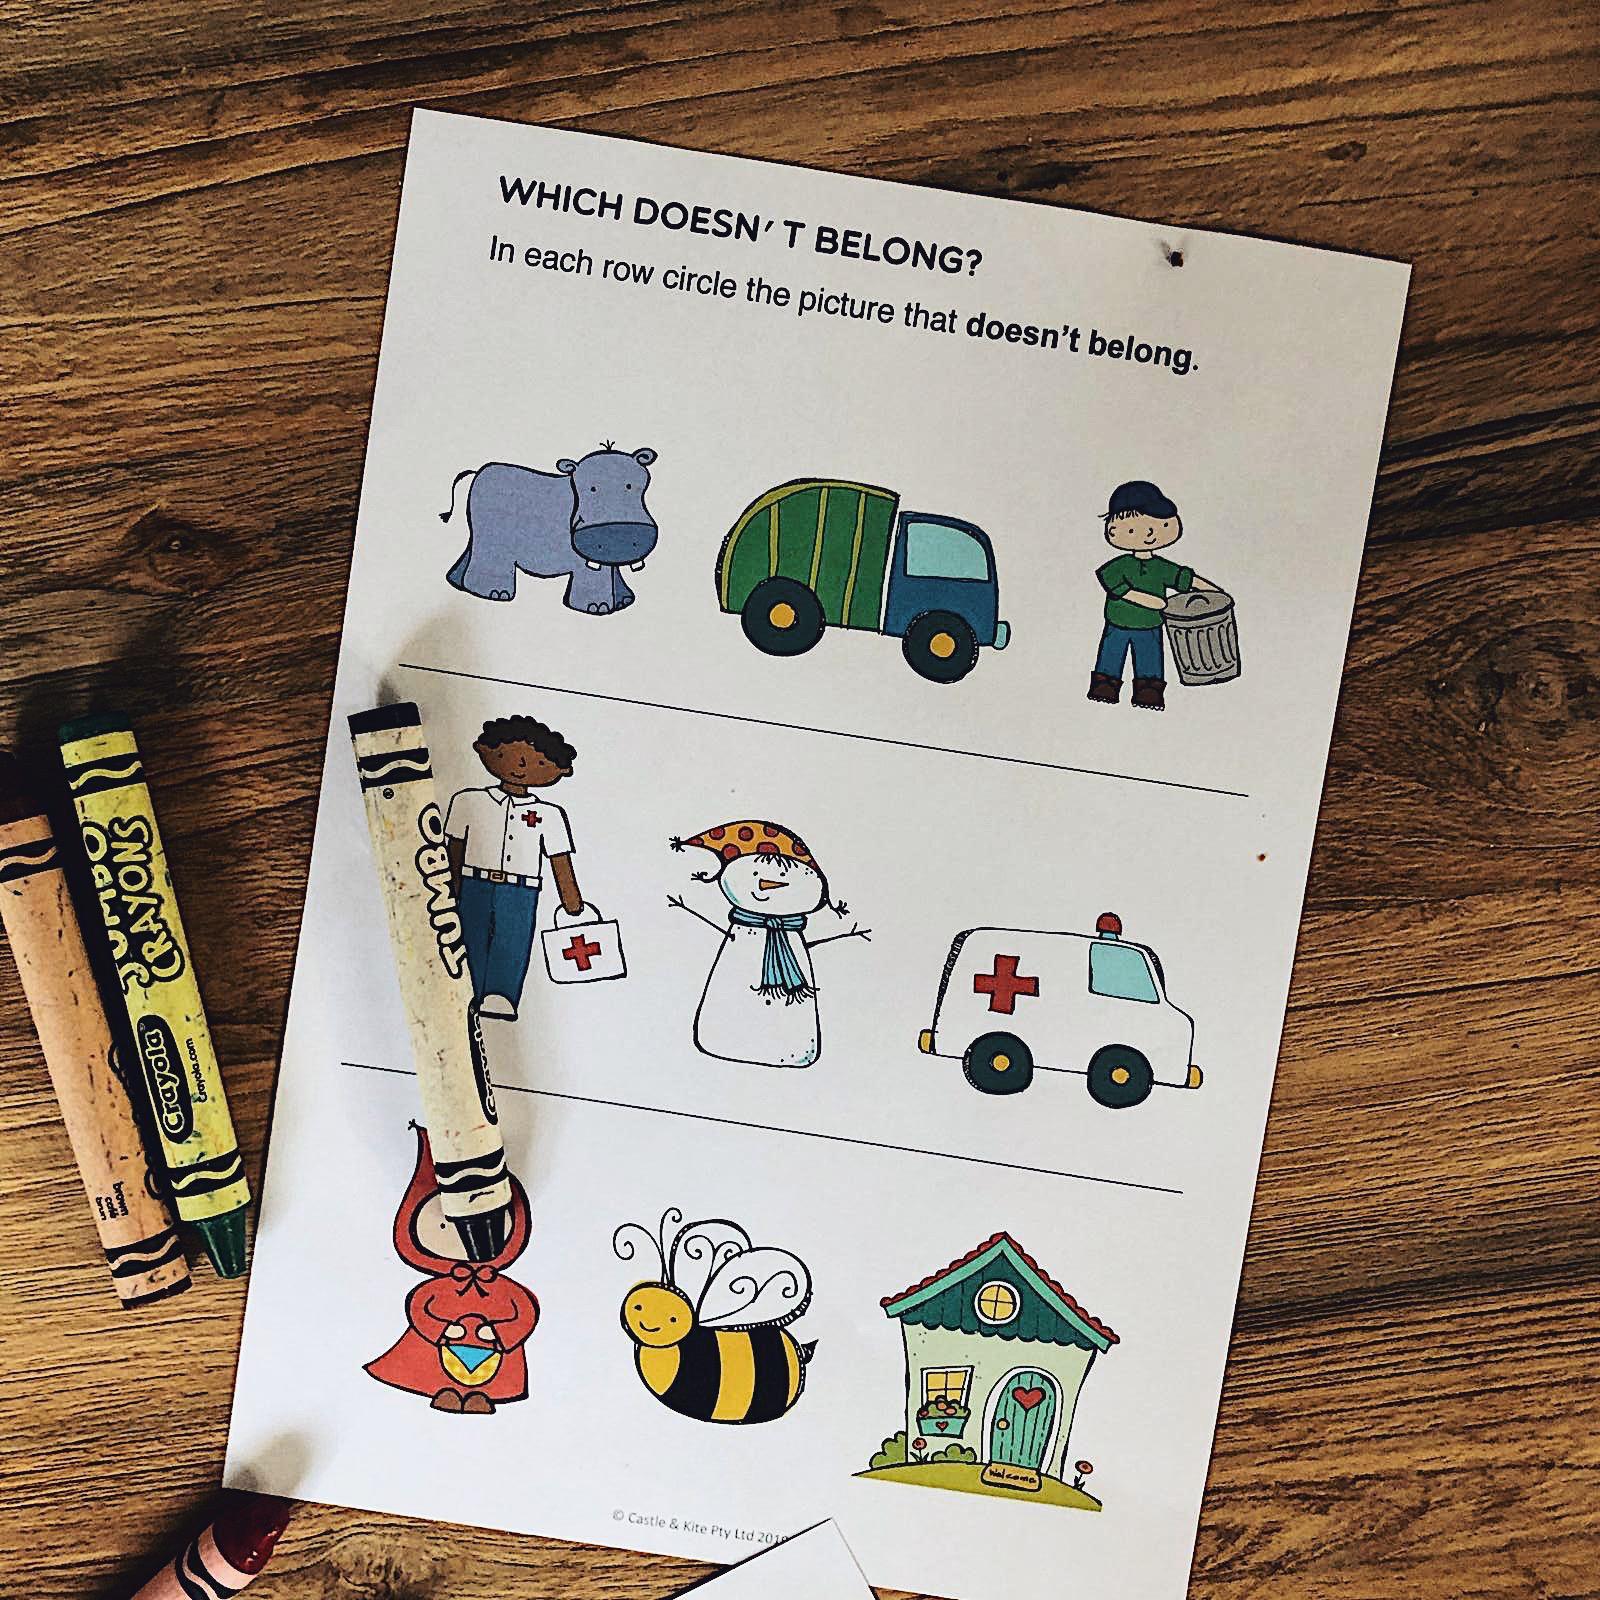 Preschool Basics Printables